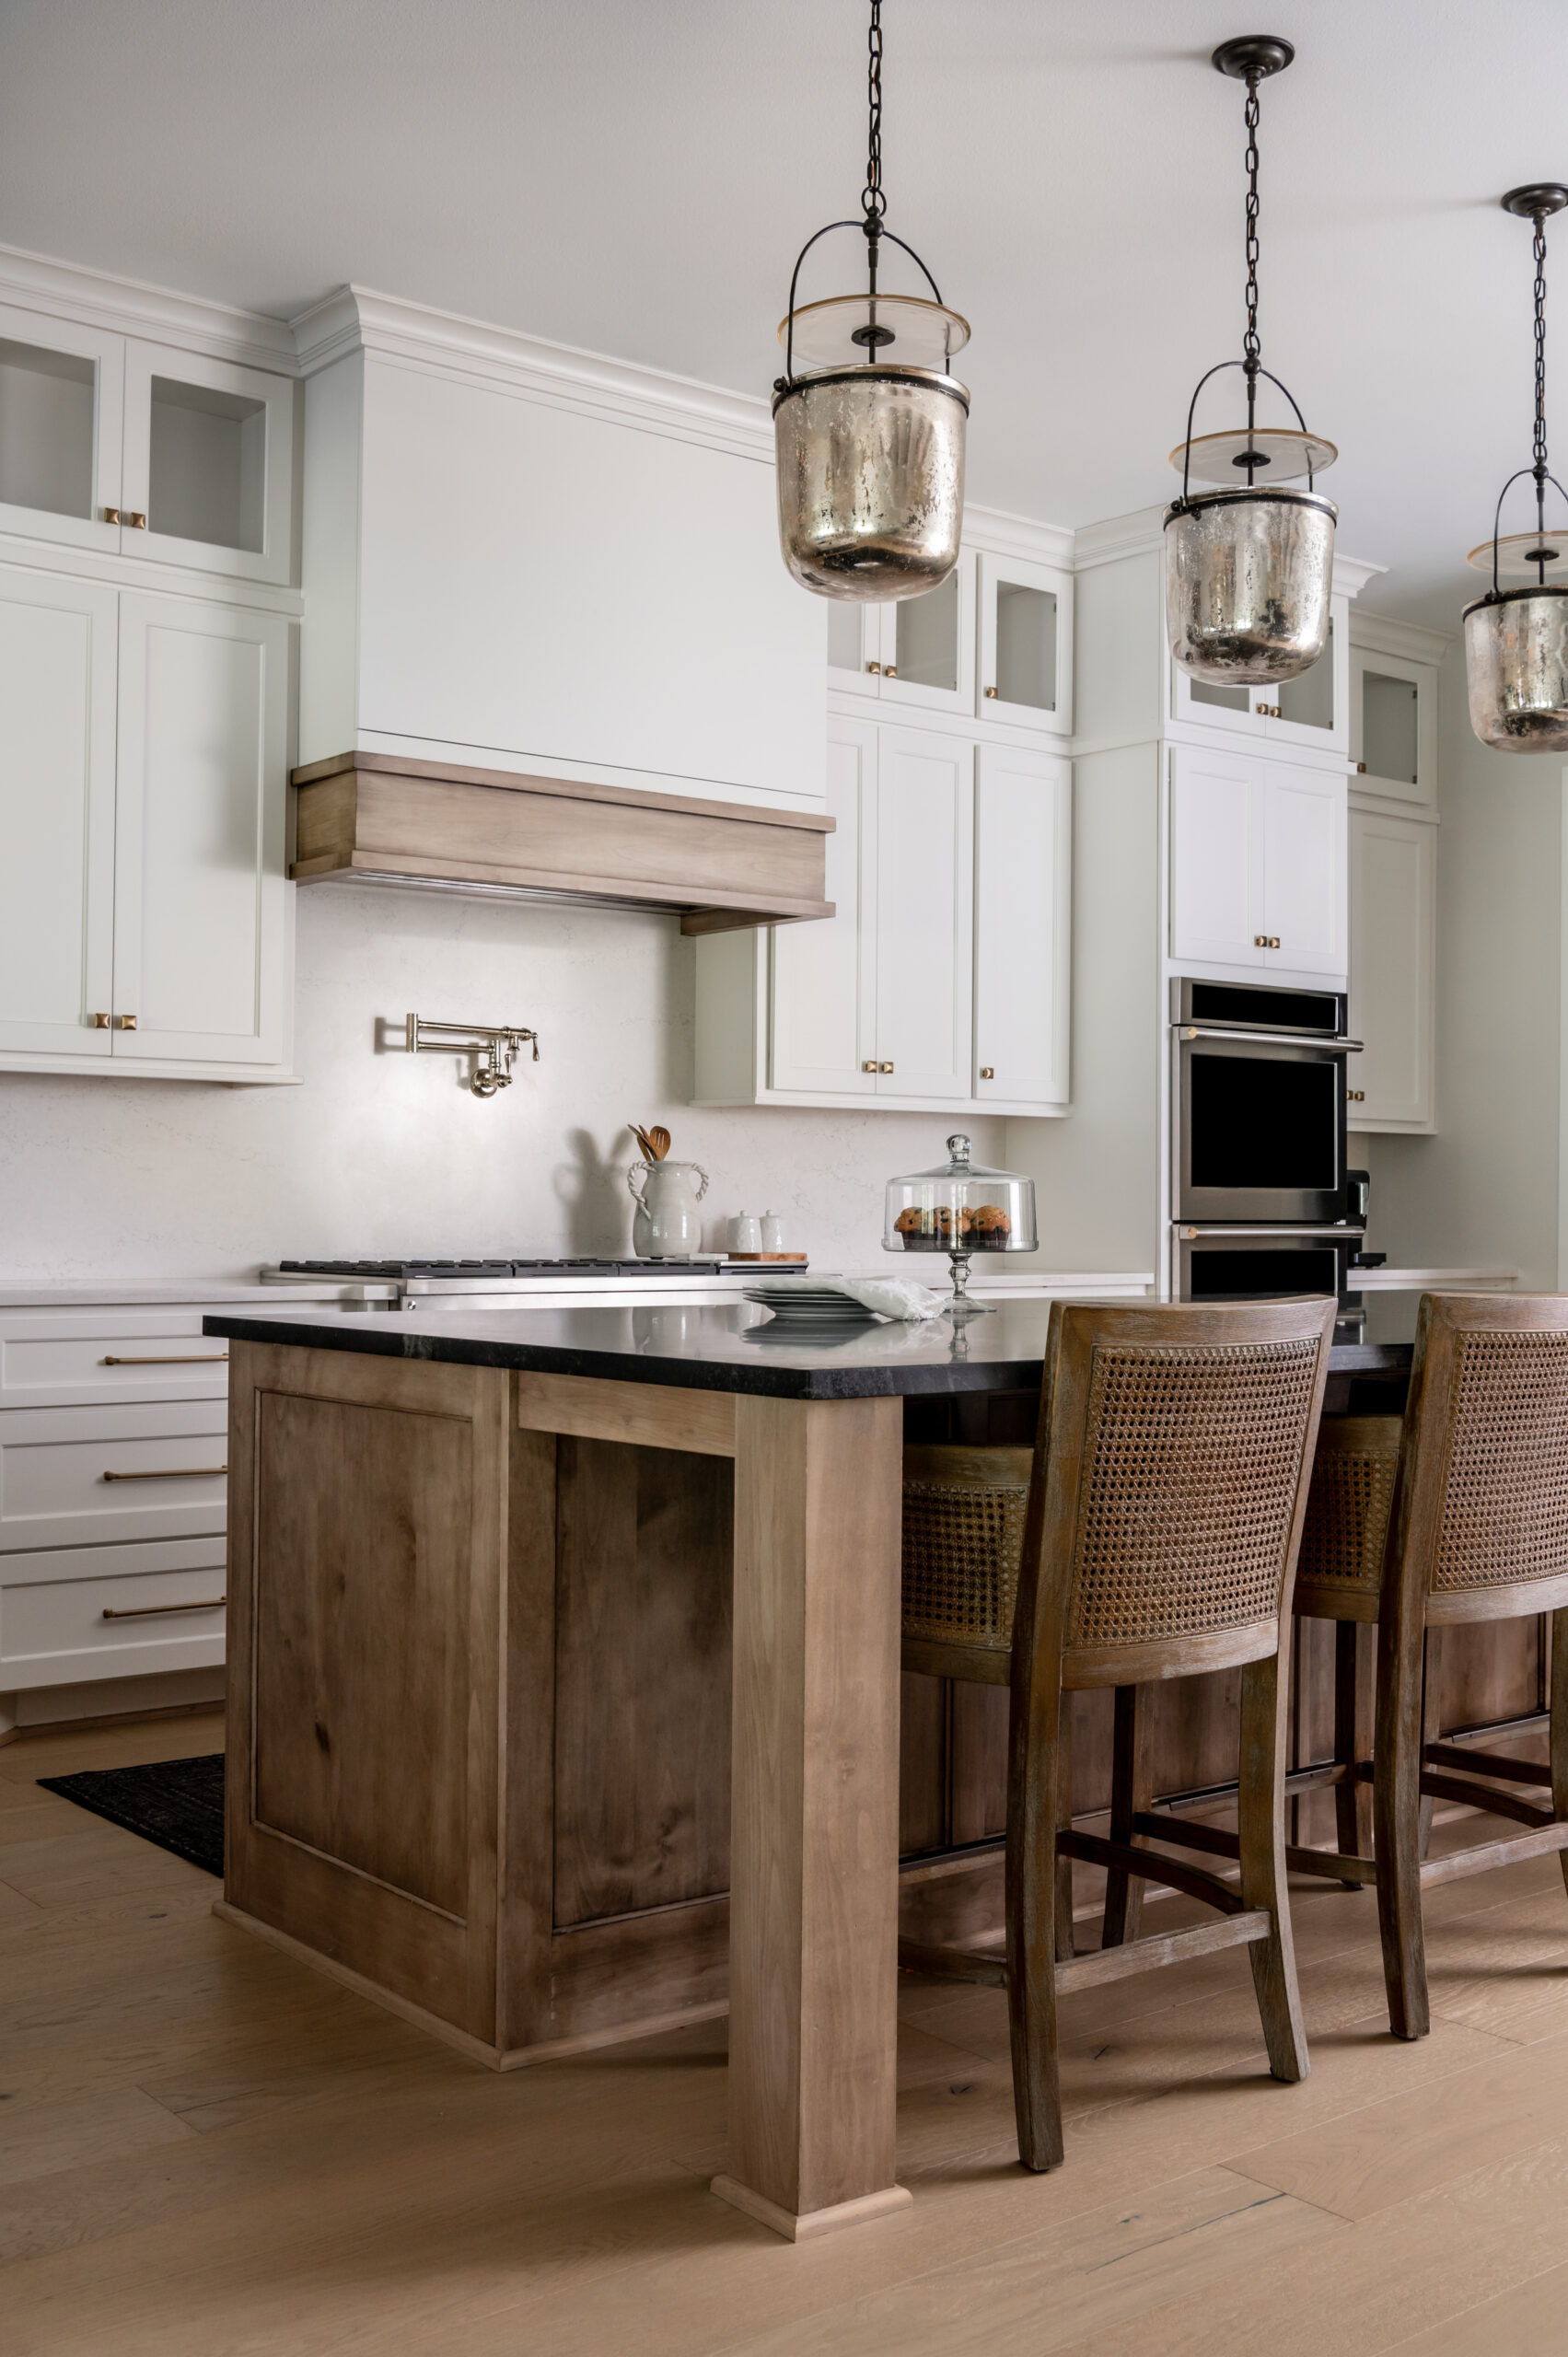 Custom home photography of elegant kitchen interior design